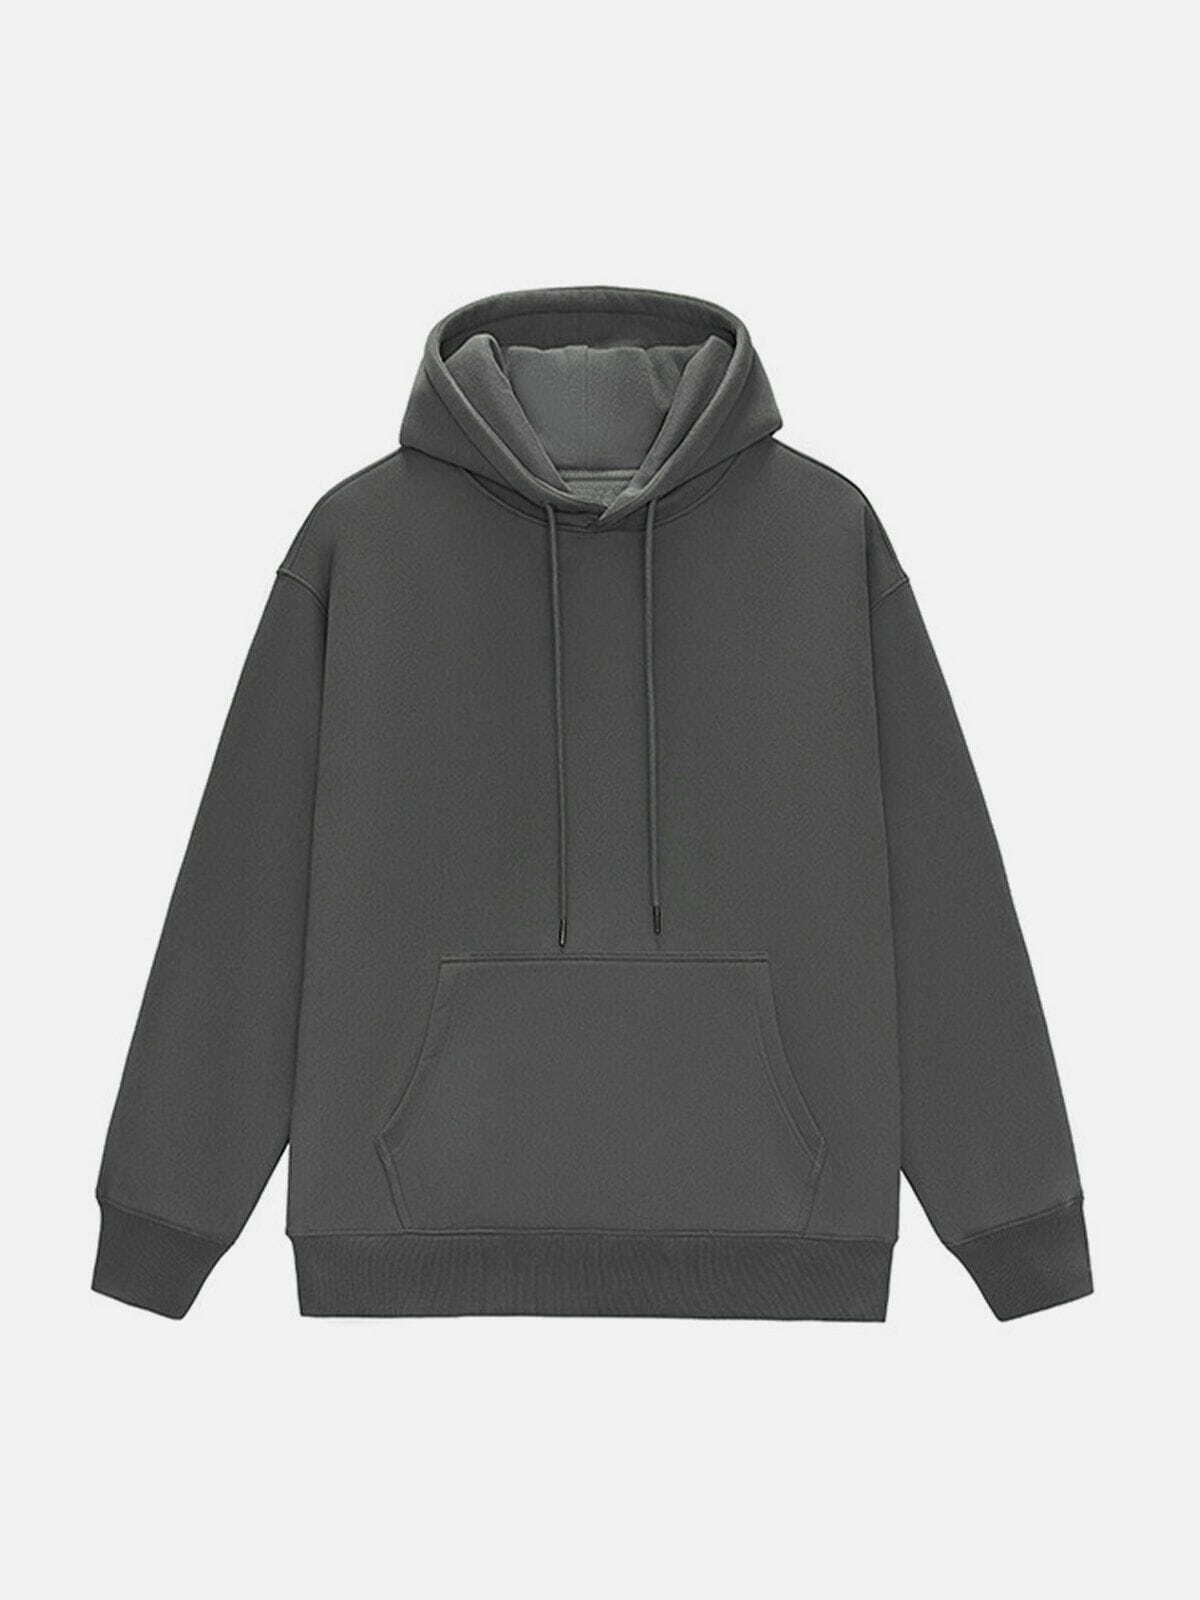 dynamic drawstring hoodie versatile & vibrant streetwear 2576